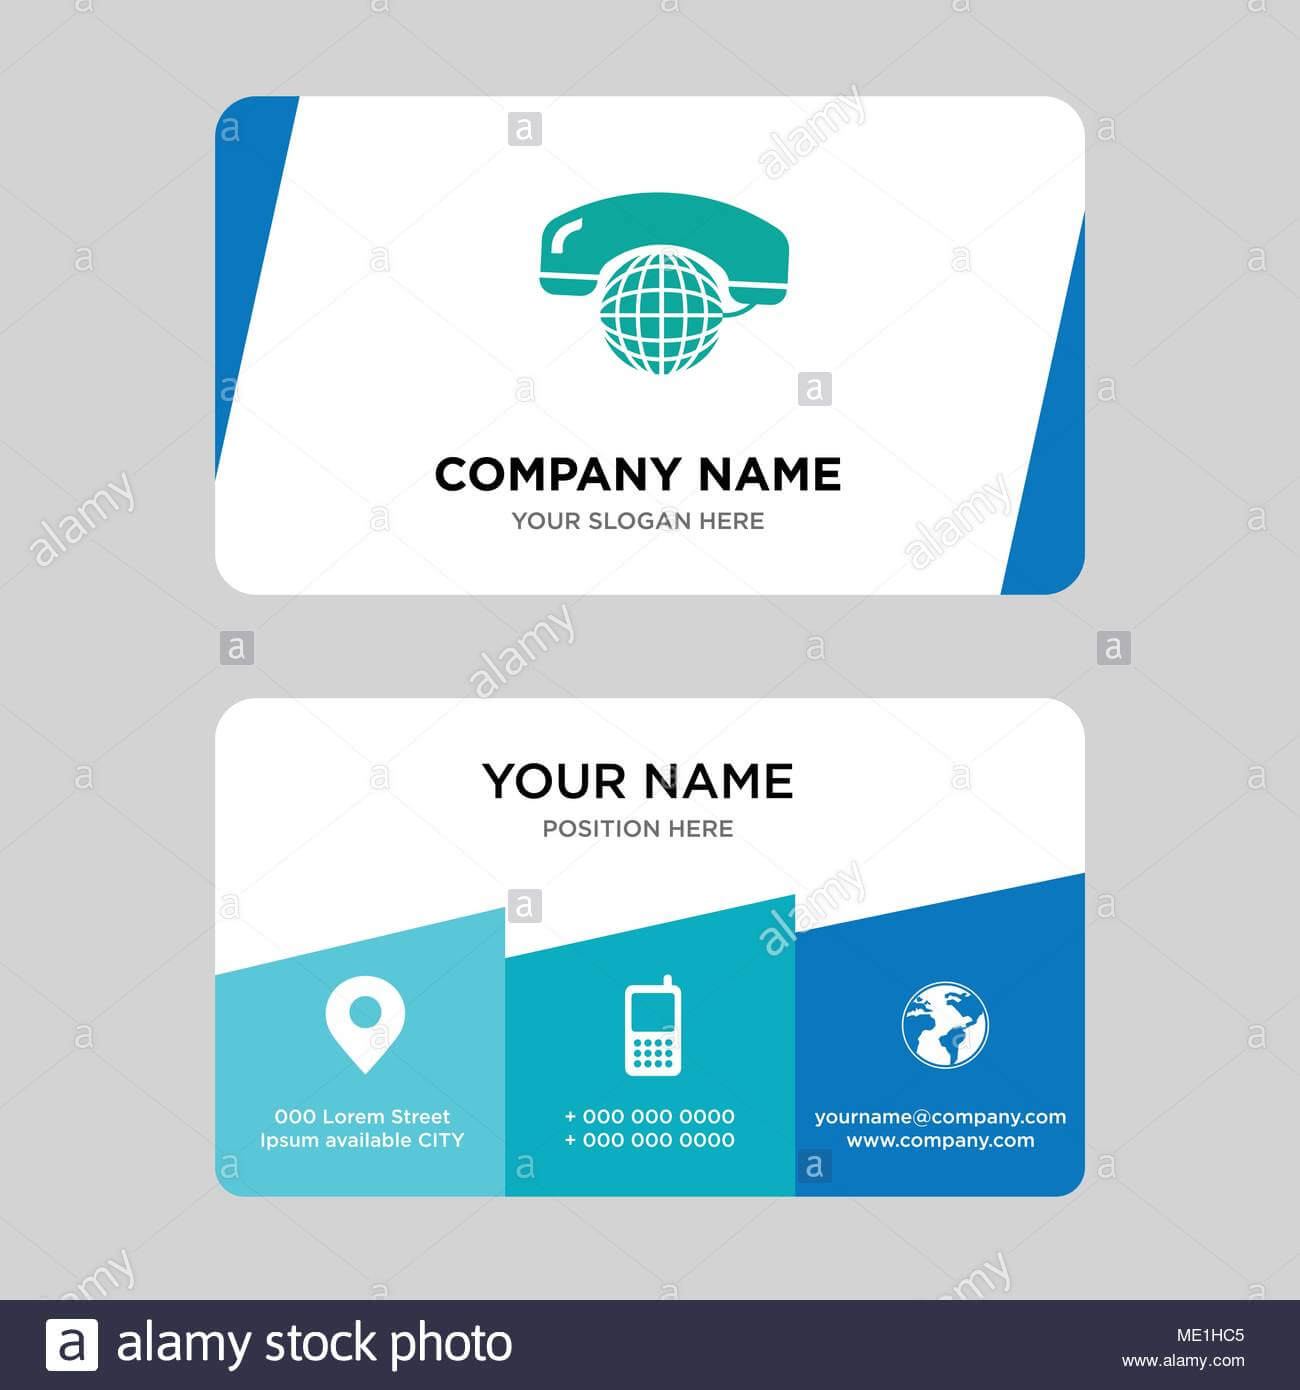 International Calling Service Business Card Design Template Regarding Template For Calling Card